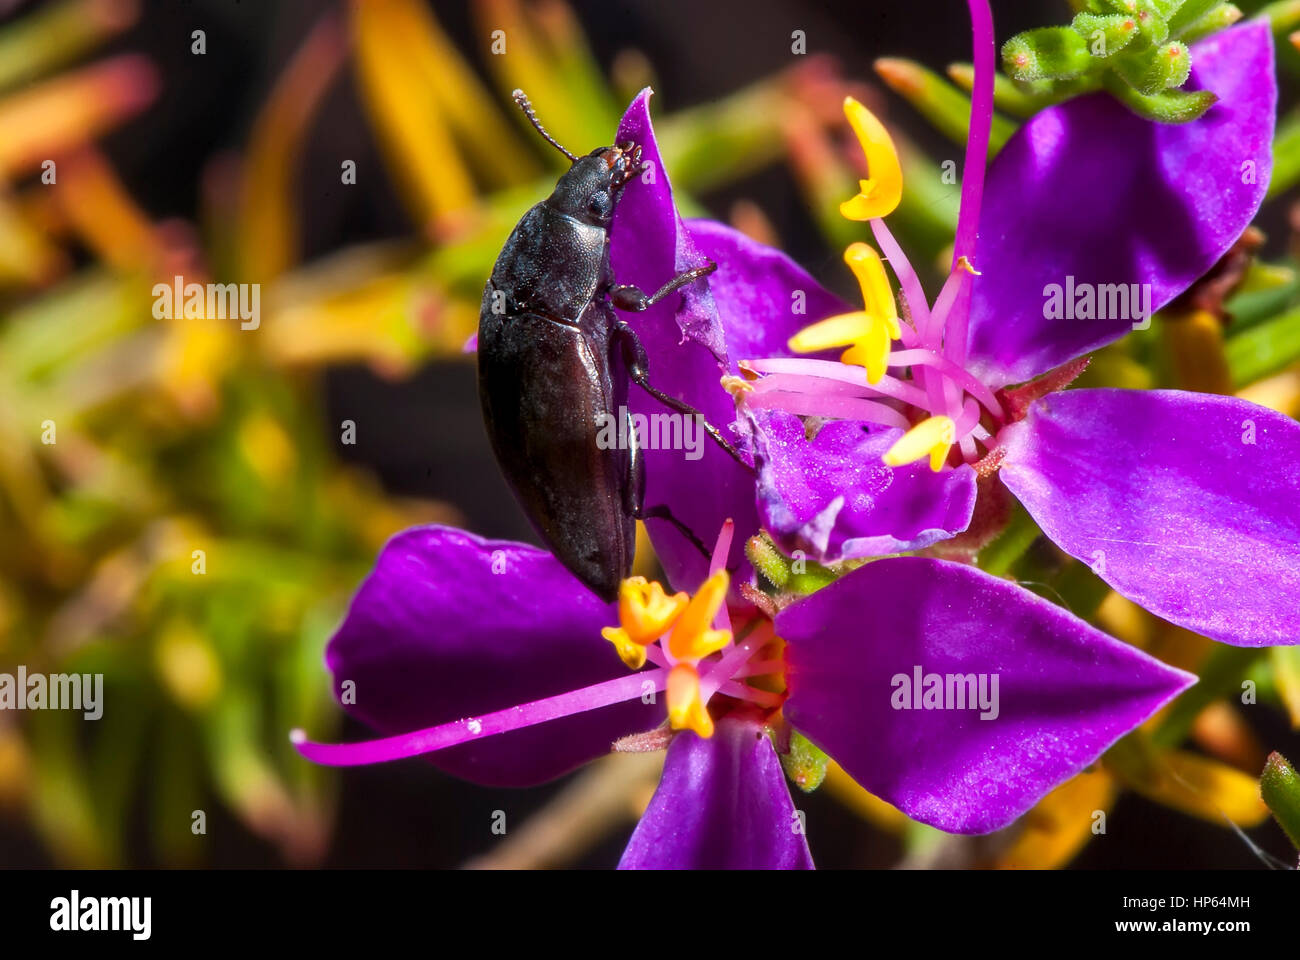 Black Beetle on a purple flower, photographed in Guarapari, Espírito Santo - Southeast of Brazil. Atlantic Forest Biome. Stock Photo